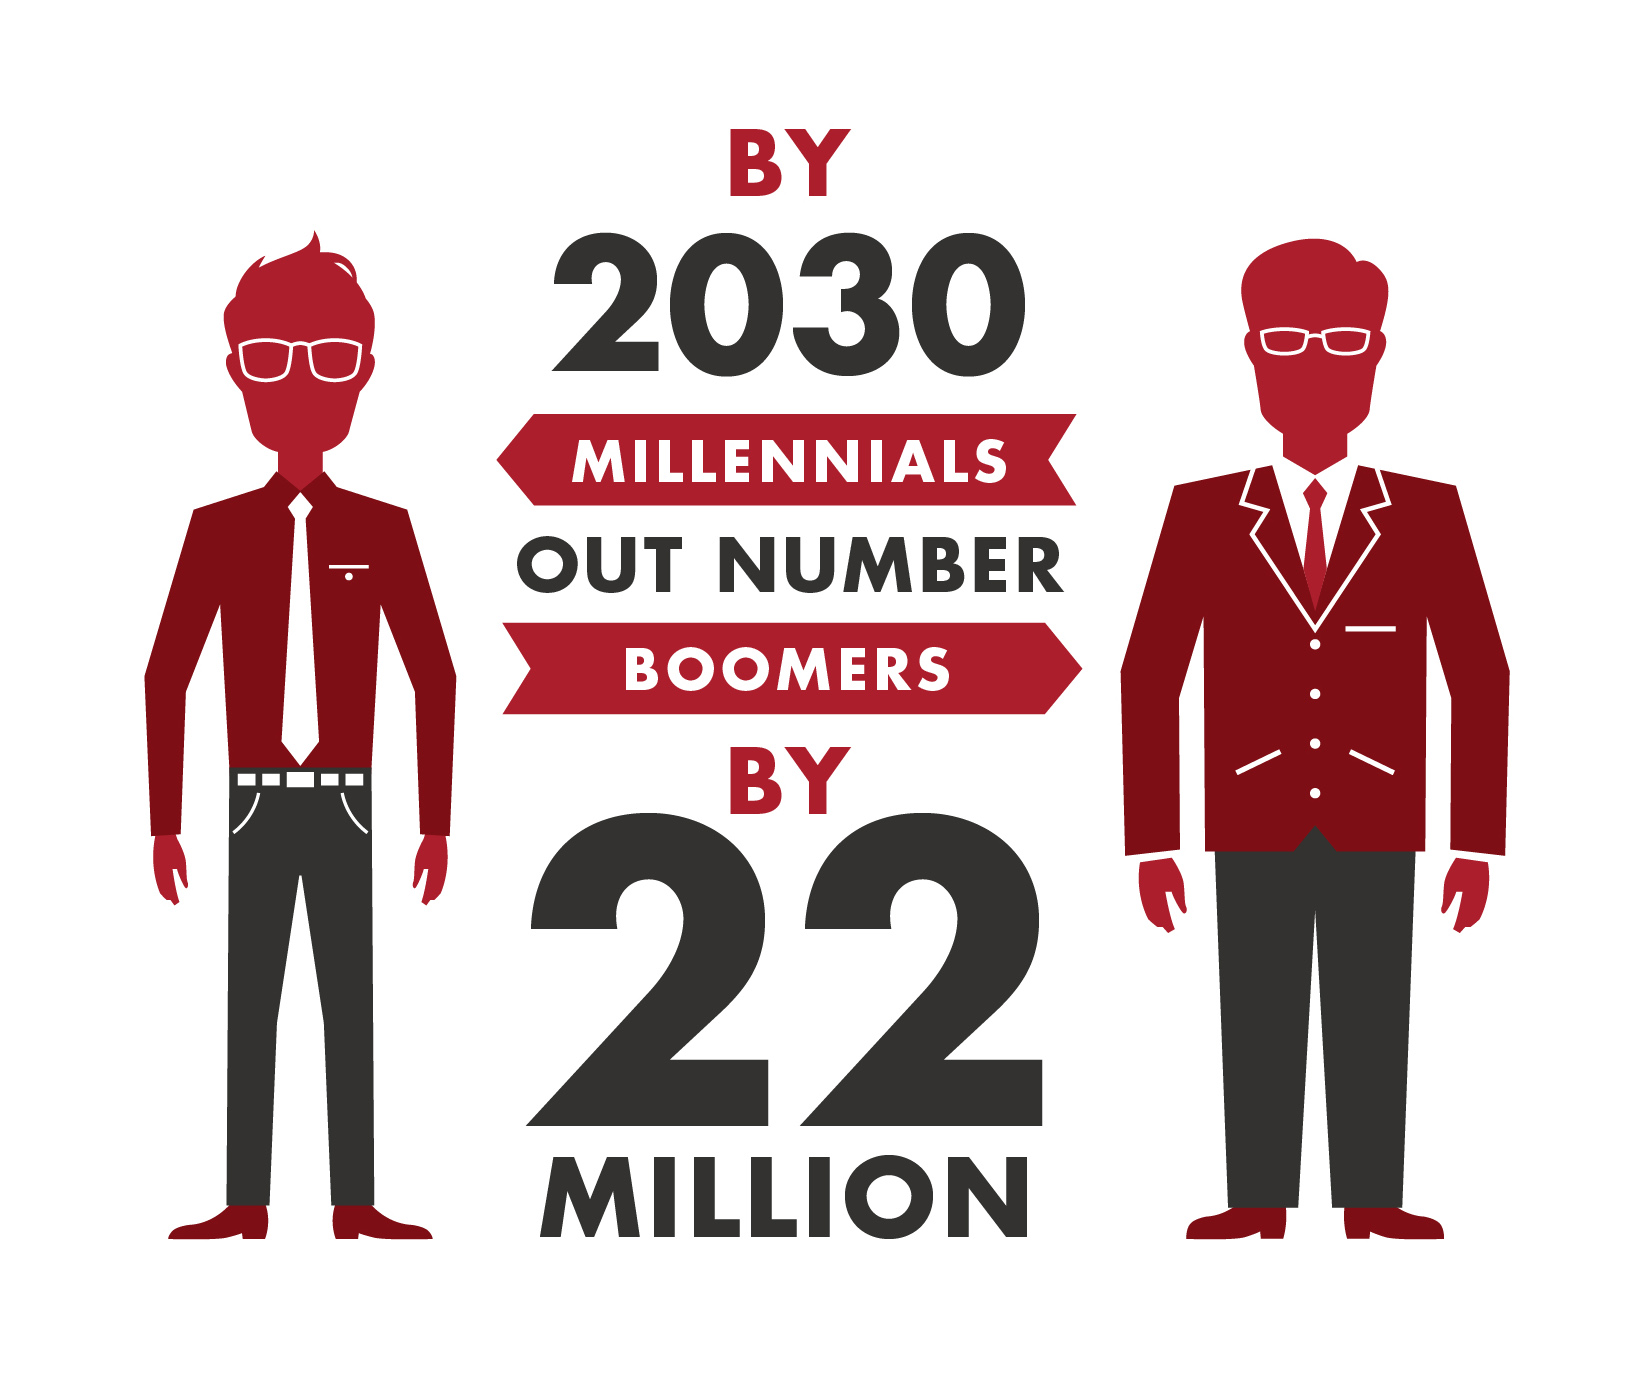 Millenials vs Boomers